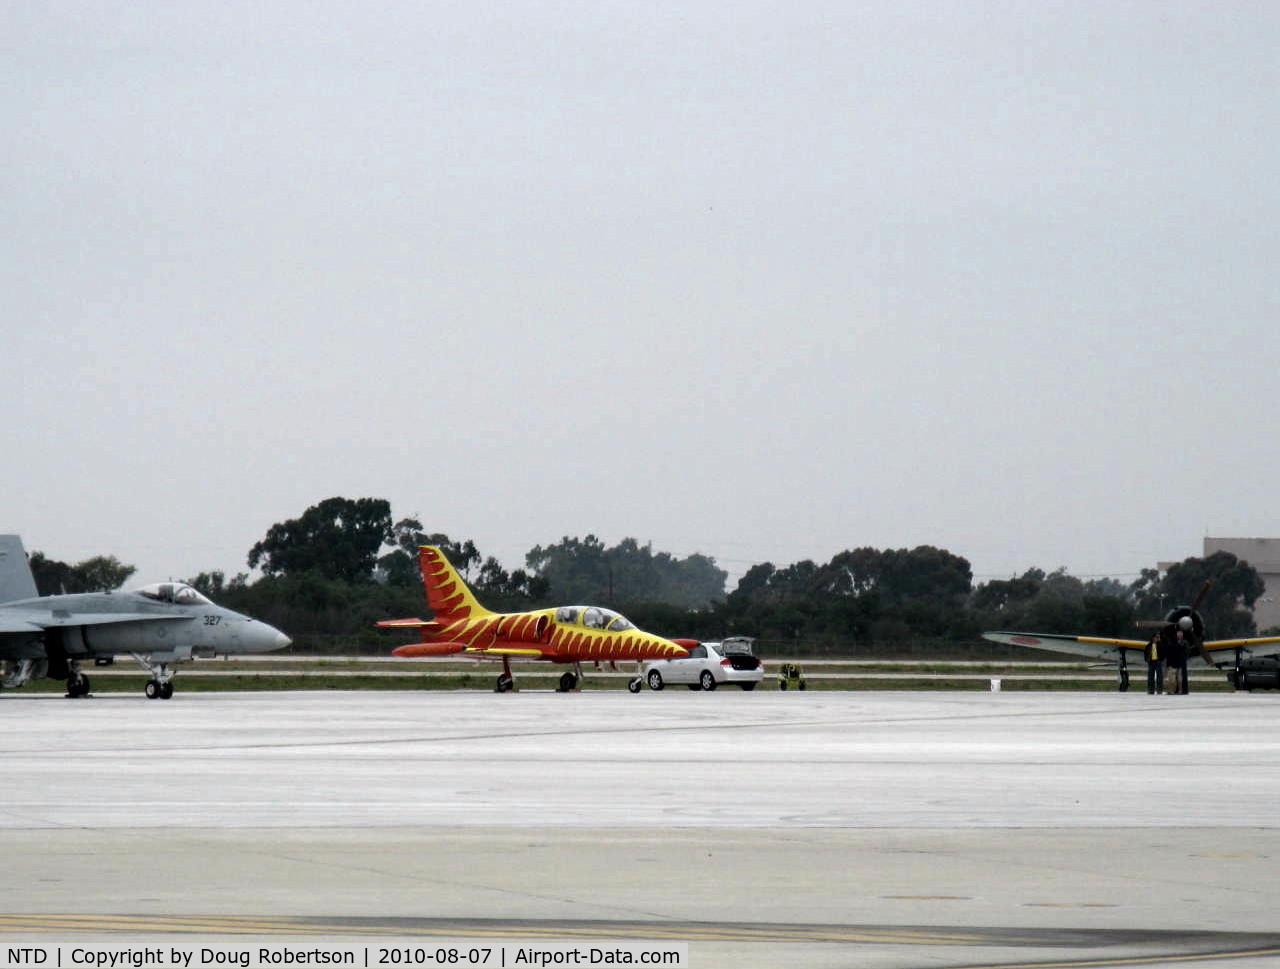 Point Mugu Nas (naval Base Ventura Co) Airport (NTD) - USN F-18 HORNET and L-39 FIRECAT NX39LW